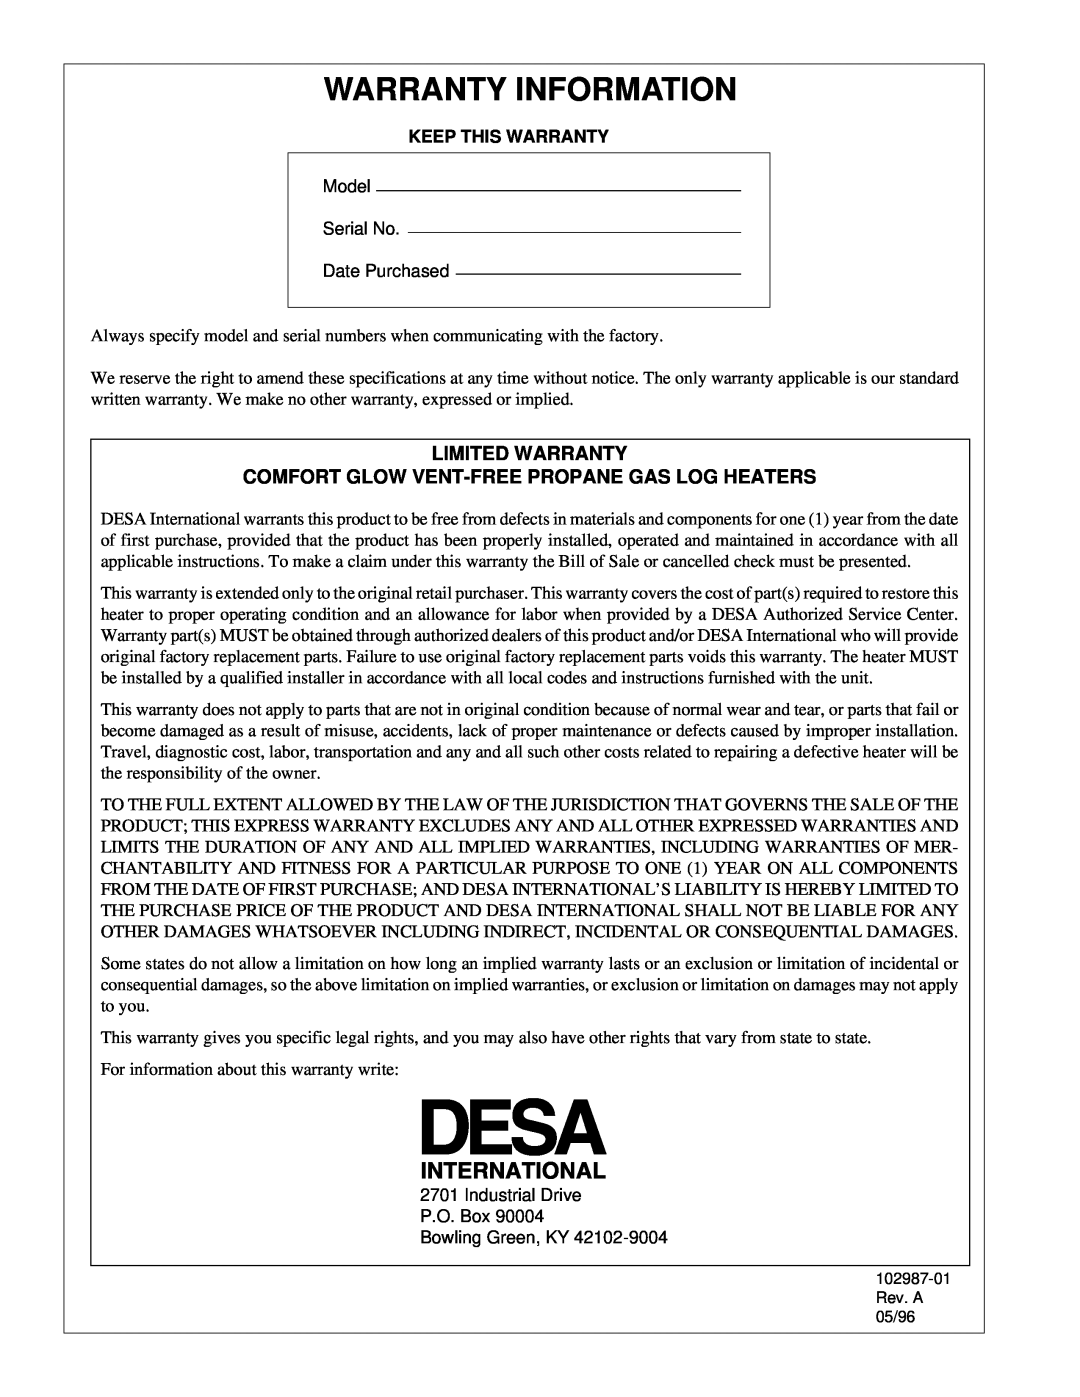 Desa CGD3018P Warranty Information, Limited Warranty, Comfort Glow Vent-Freepropane Gas Log Heaters, Keep This Warranty 